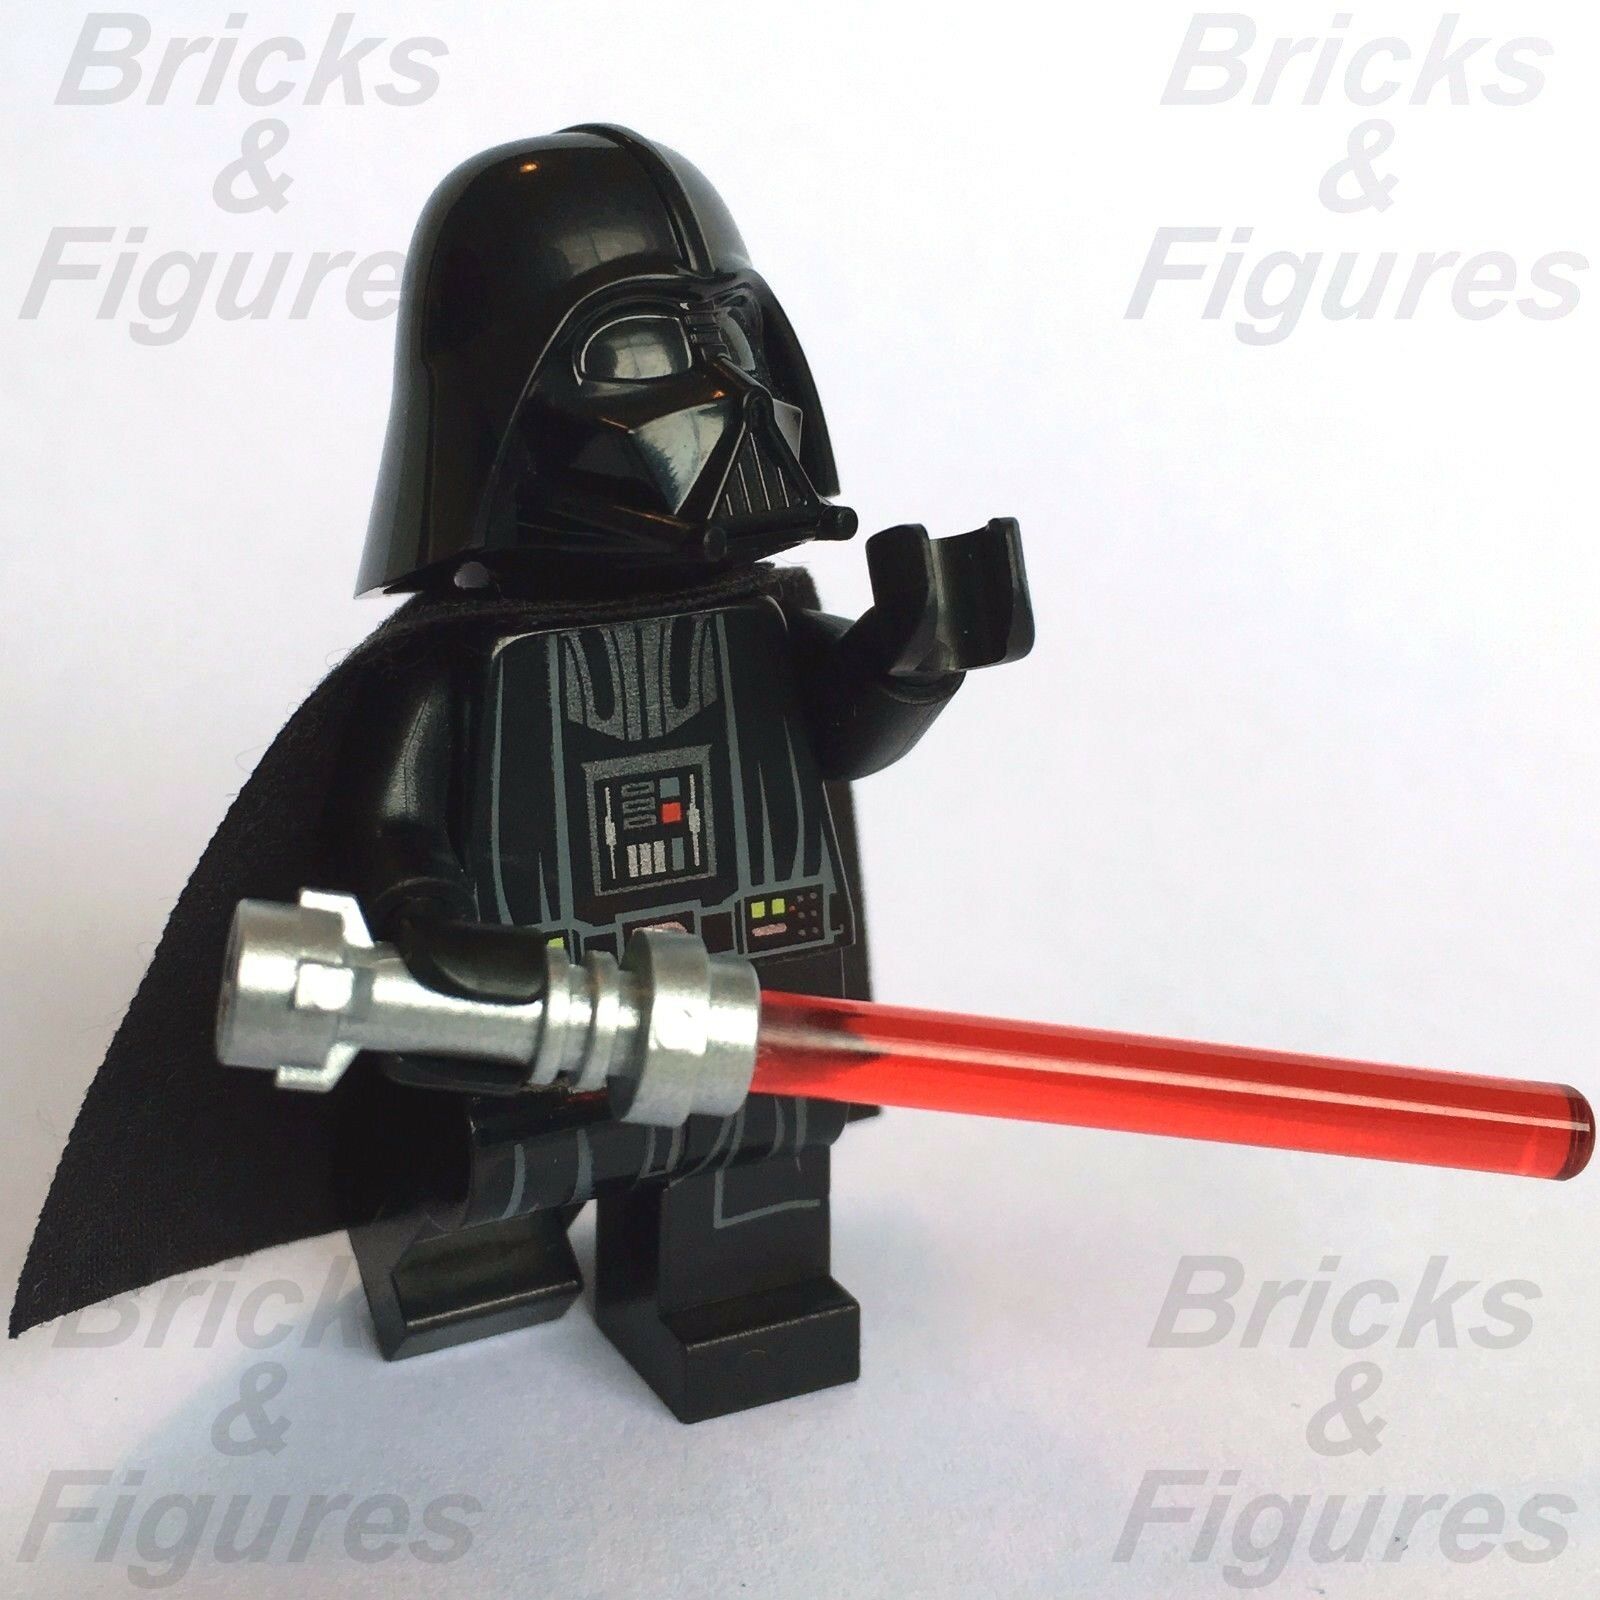 New Star Wars LEGO Darth Vader Sith Lord The Clone Wars Minifigure 75150 - Bricks & Figures